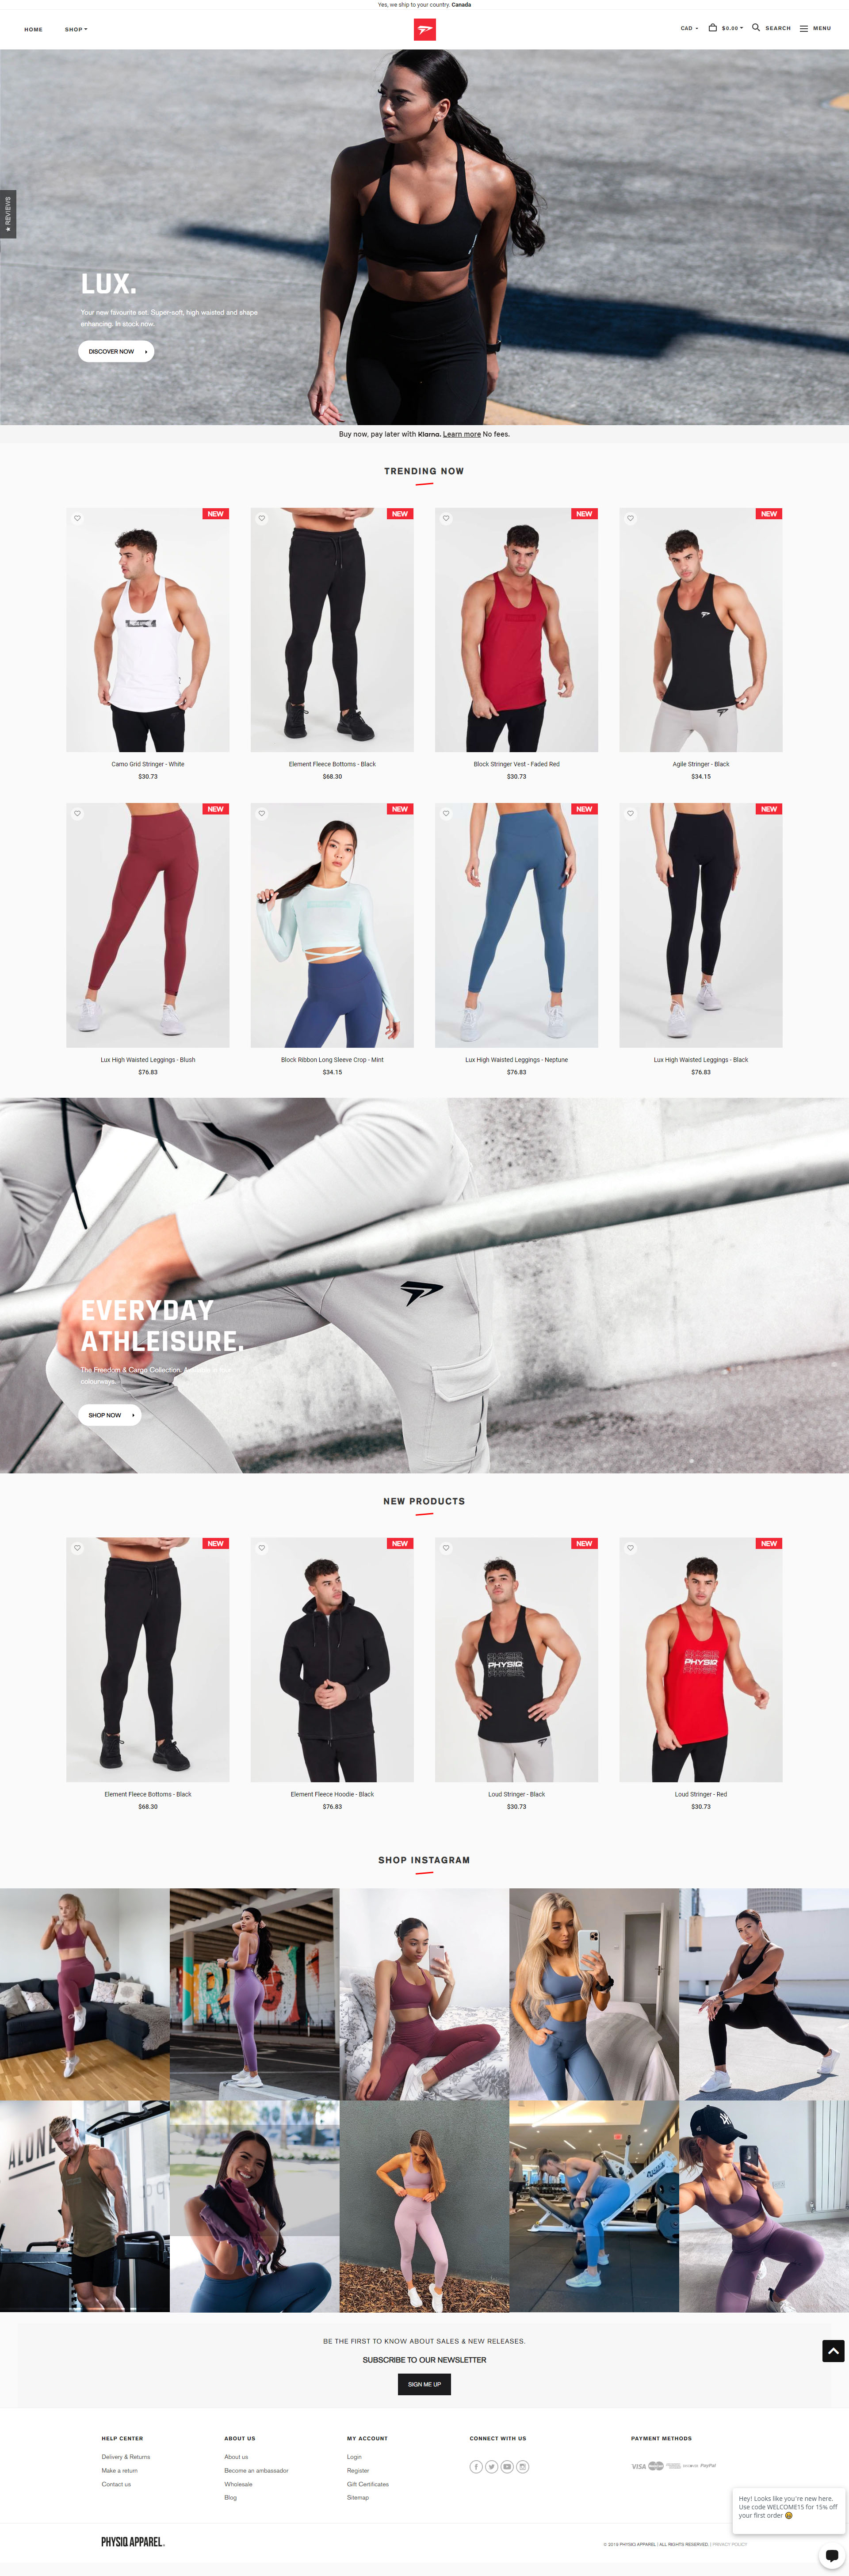 Previous Fitness Apparel Website Design Example